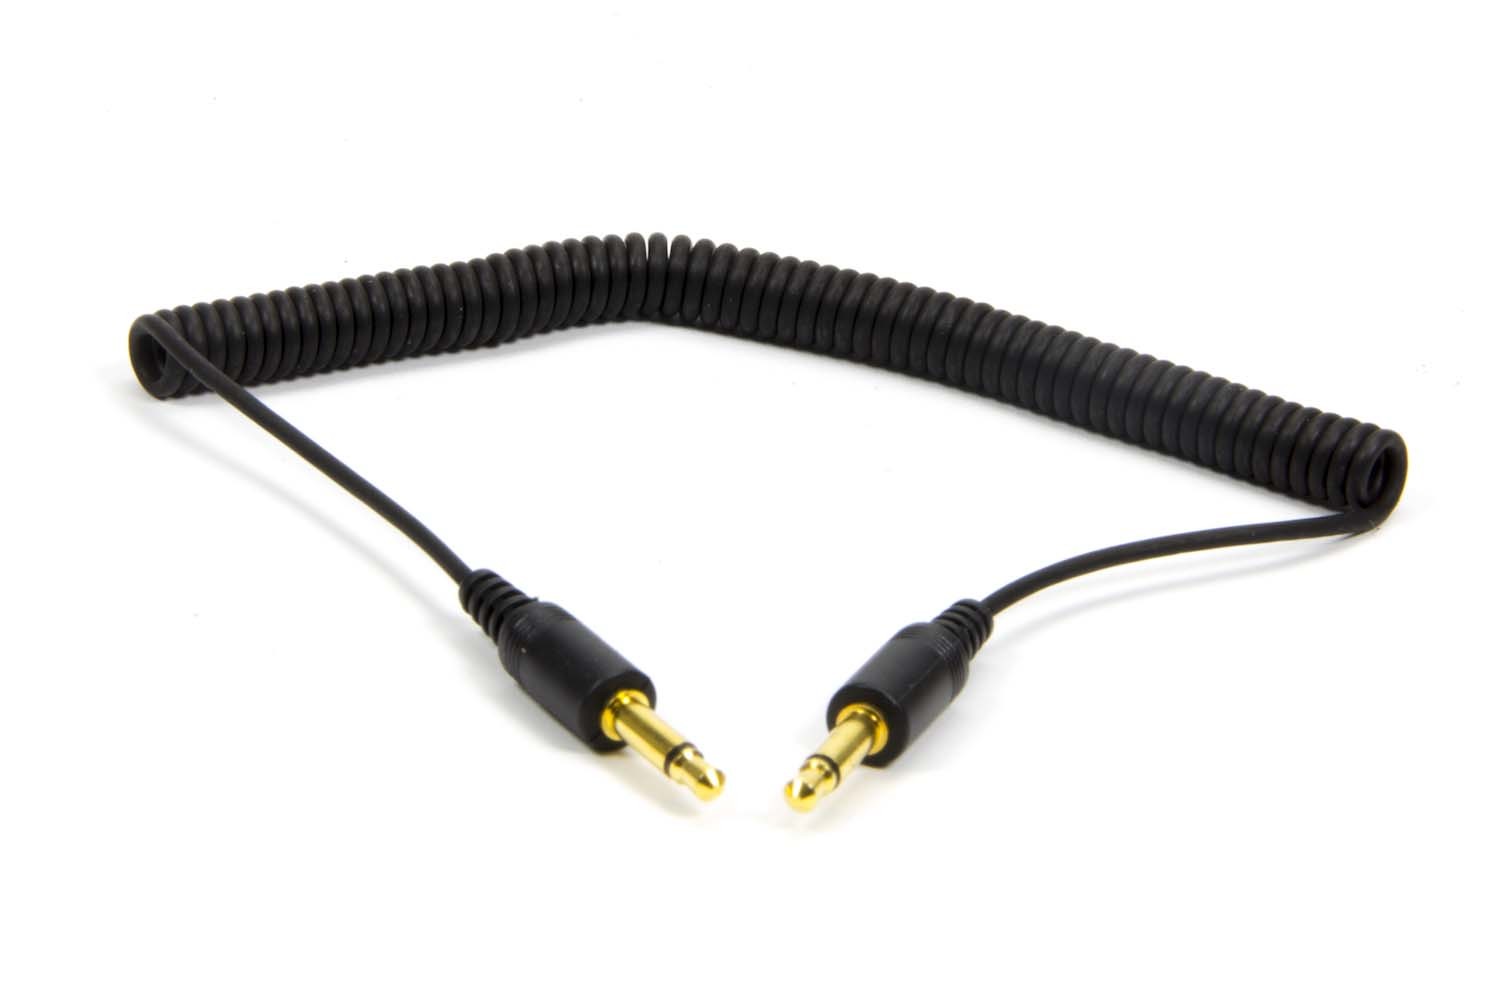 Raceceiver CC360 - Headphone Axillary Cord, 14 in Length, Coiled, Black, Each